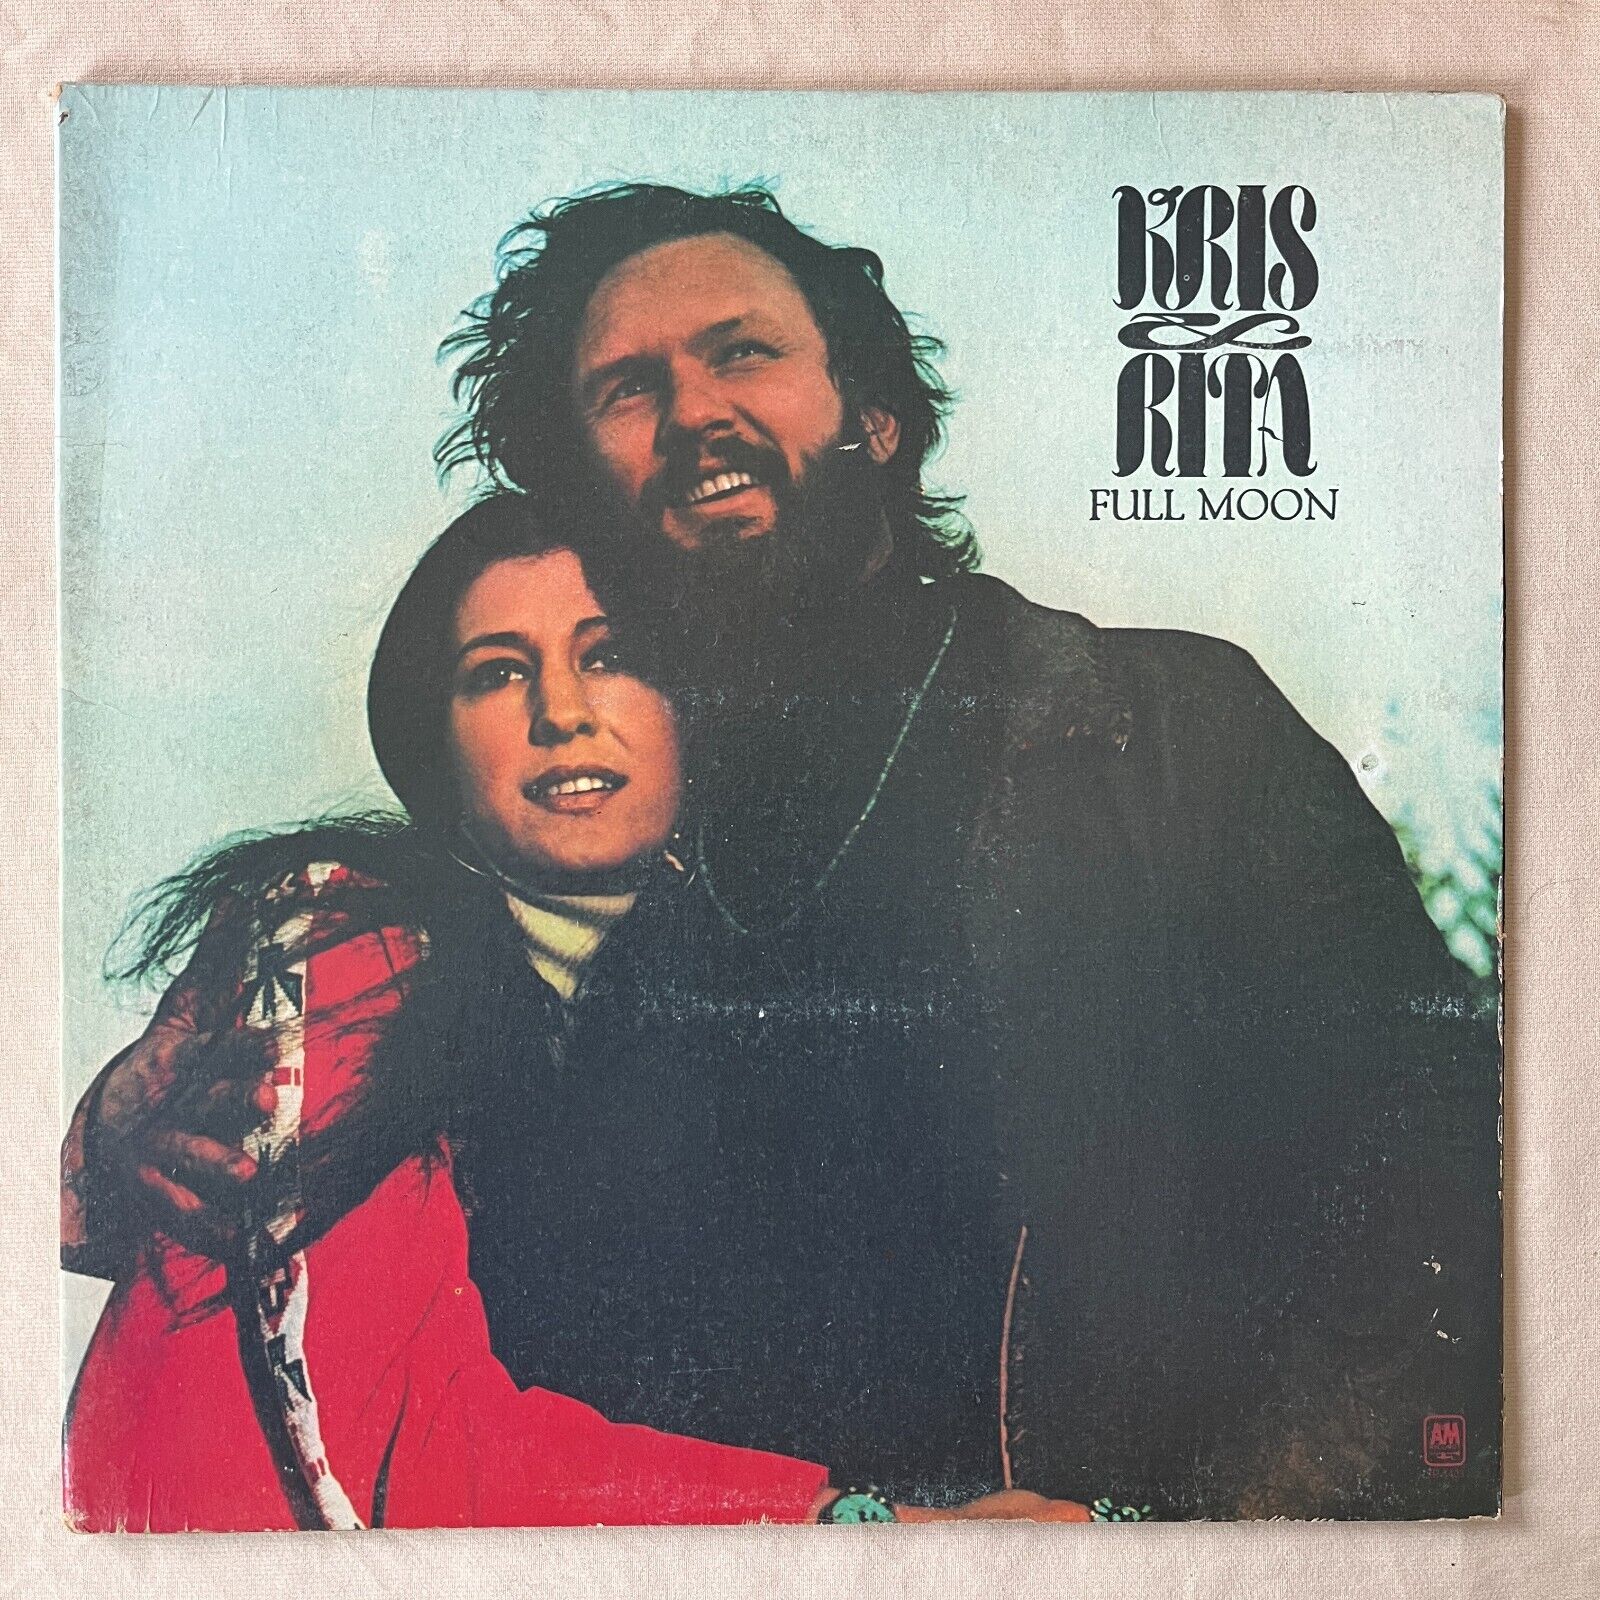 KRIS & RITA Full Moon 1973 Vinyl LP A&M Records SP-4403 - VG